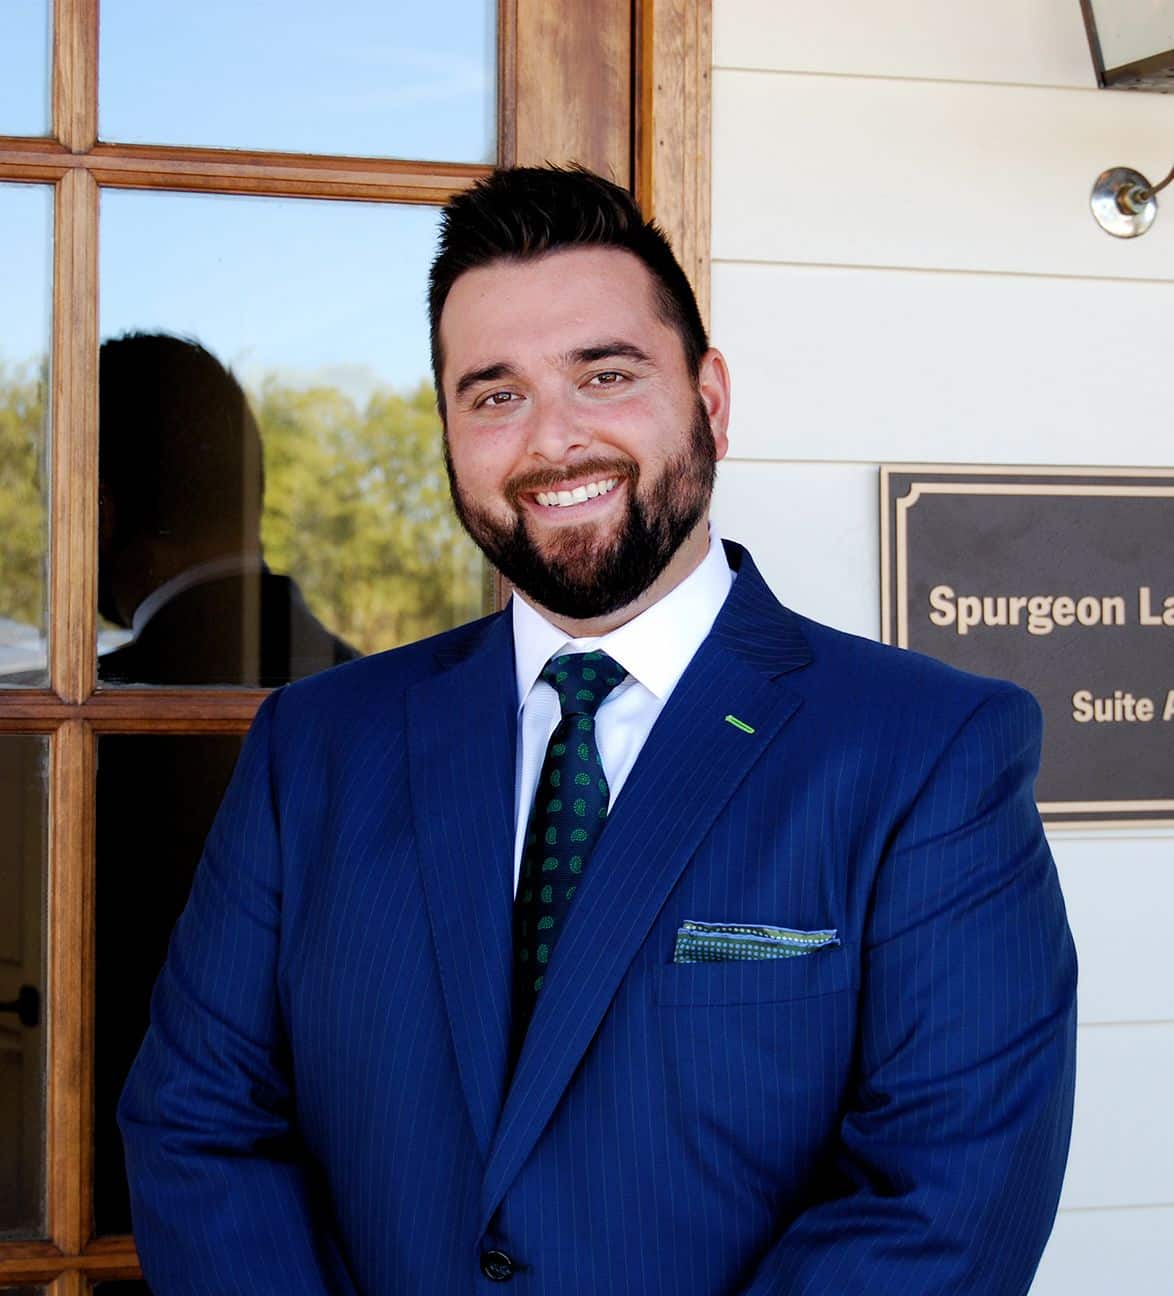 Samuel J. Spurgeon Personal Injury Lawyer at Spurgeon Law Firm